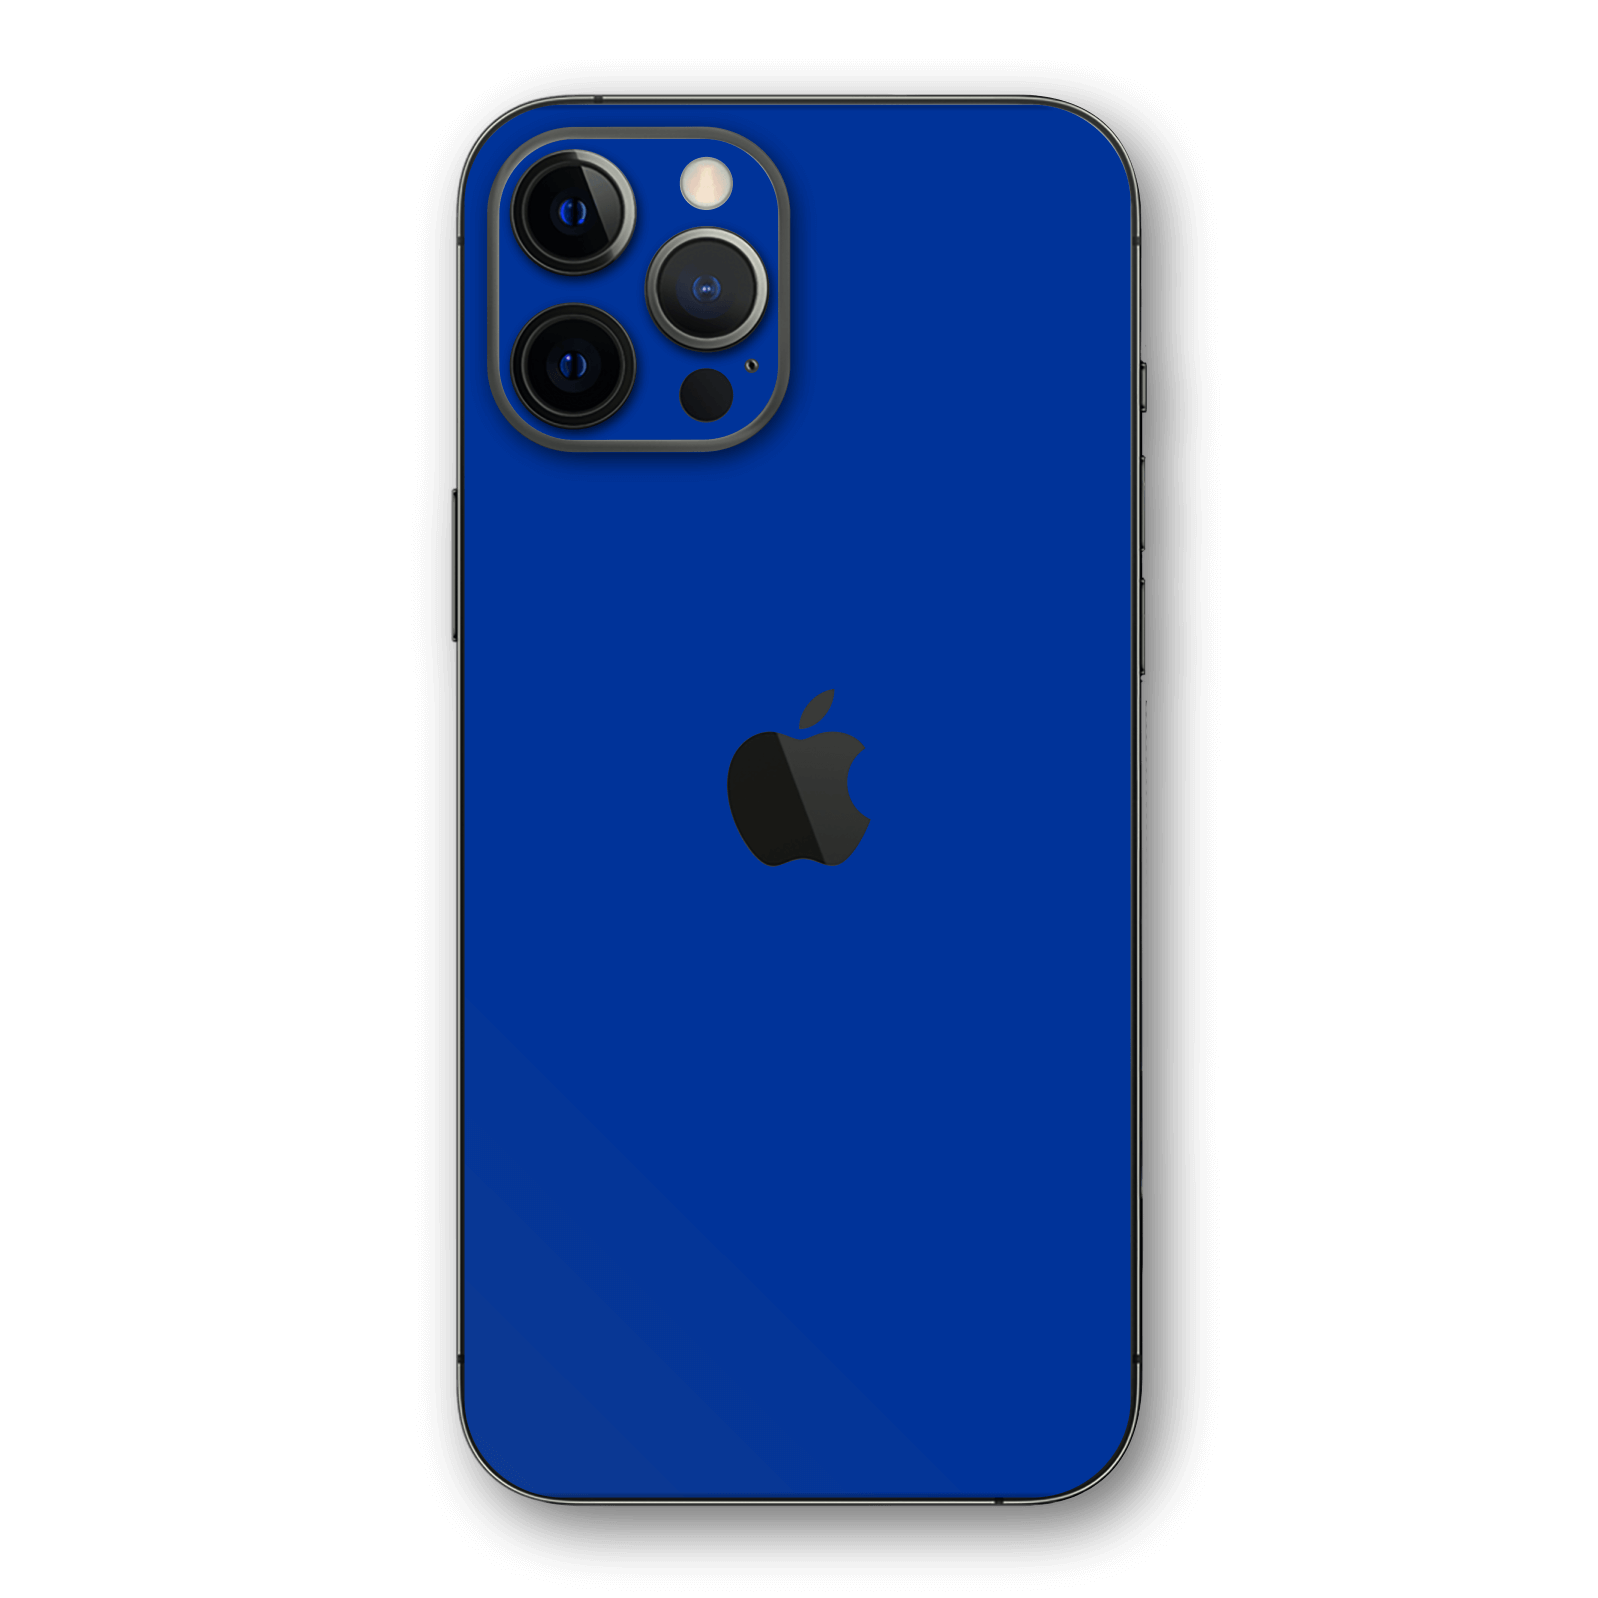 Iphone 15 blue. Iphone 12 Pro Max Blue. Айфон 12 Pro Max Ocean Blue. Iphone 12 Pro Max синий. Iphone 12 Pro Max Deep.